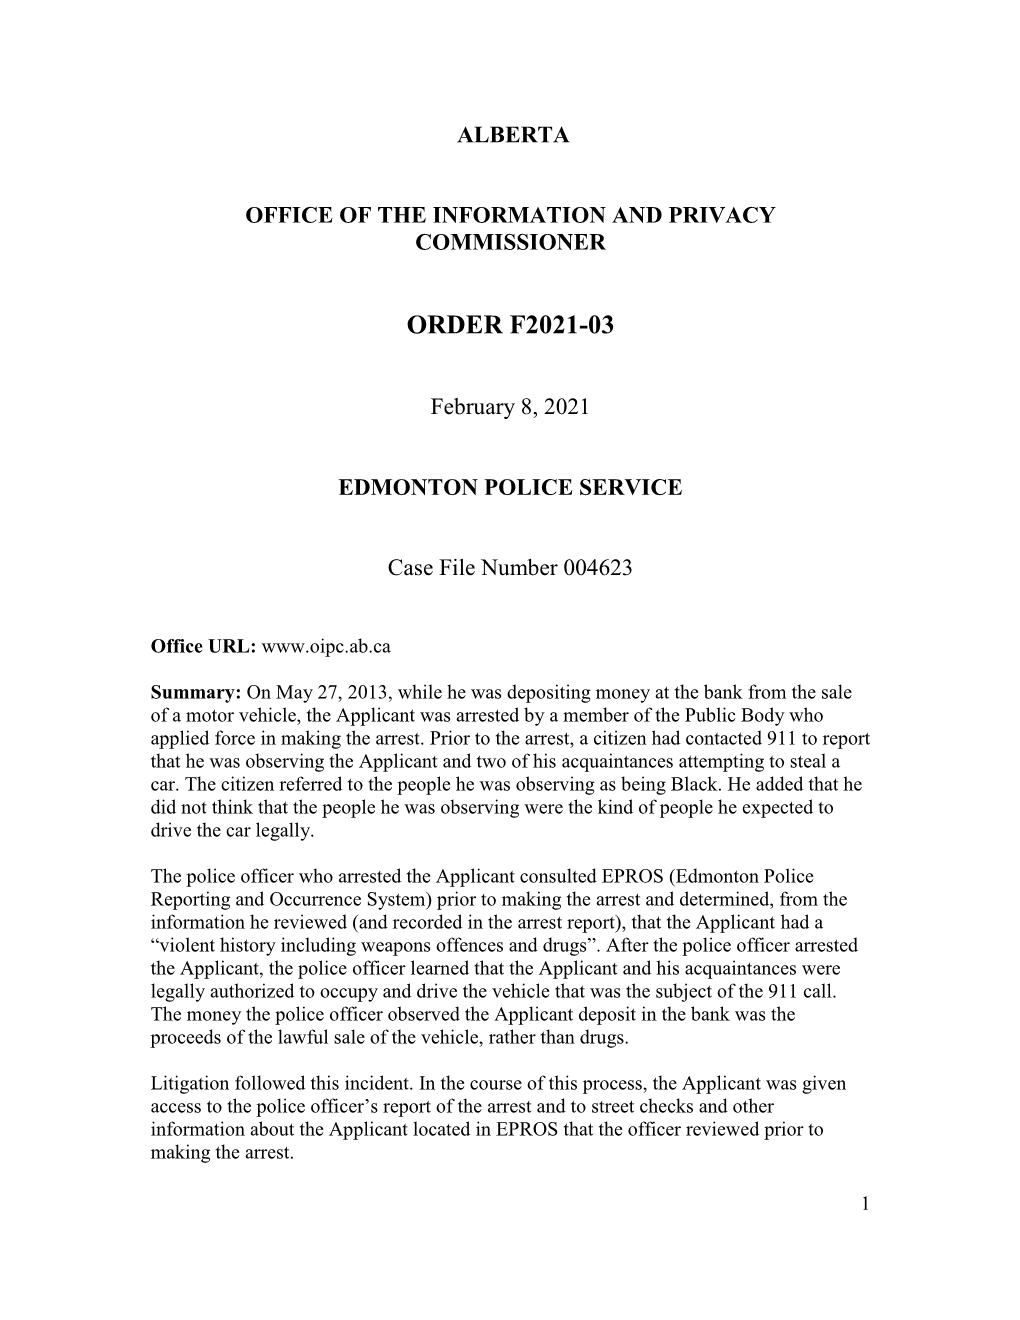 Order F2021-03: Edmonton Police Service